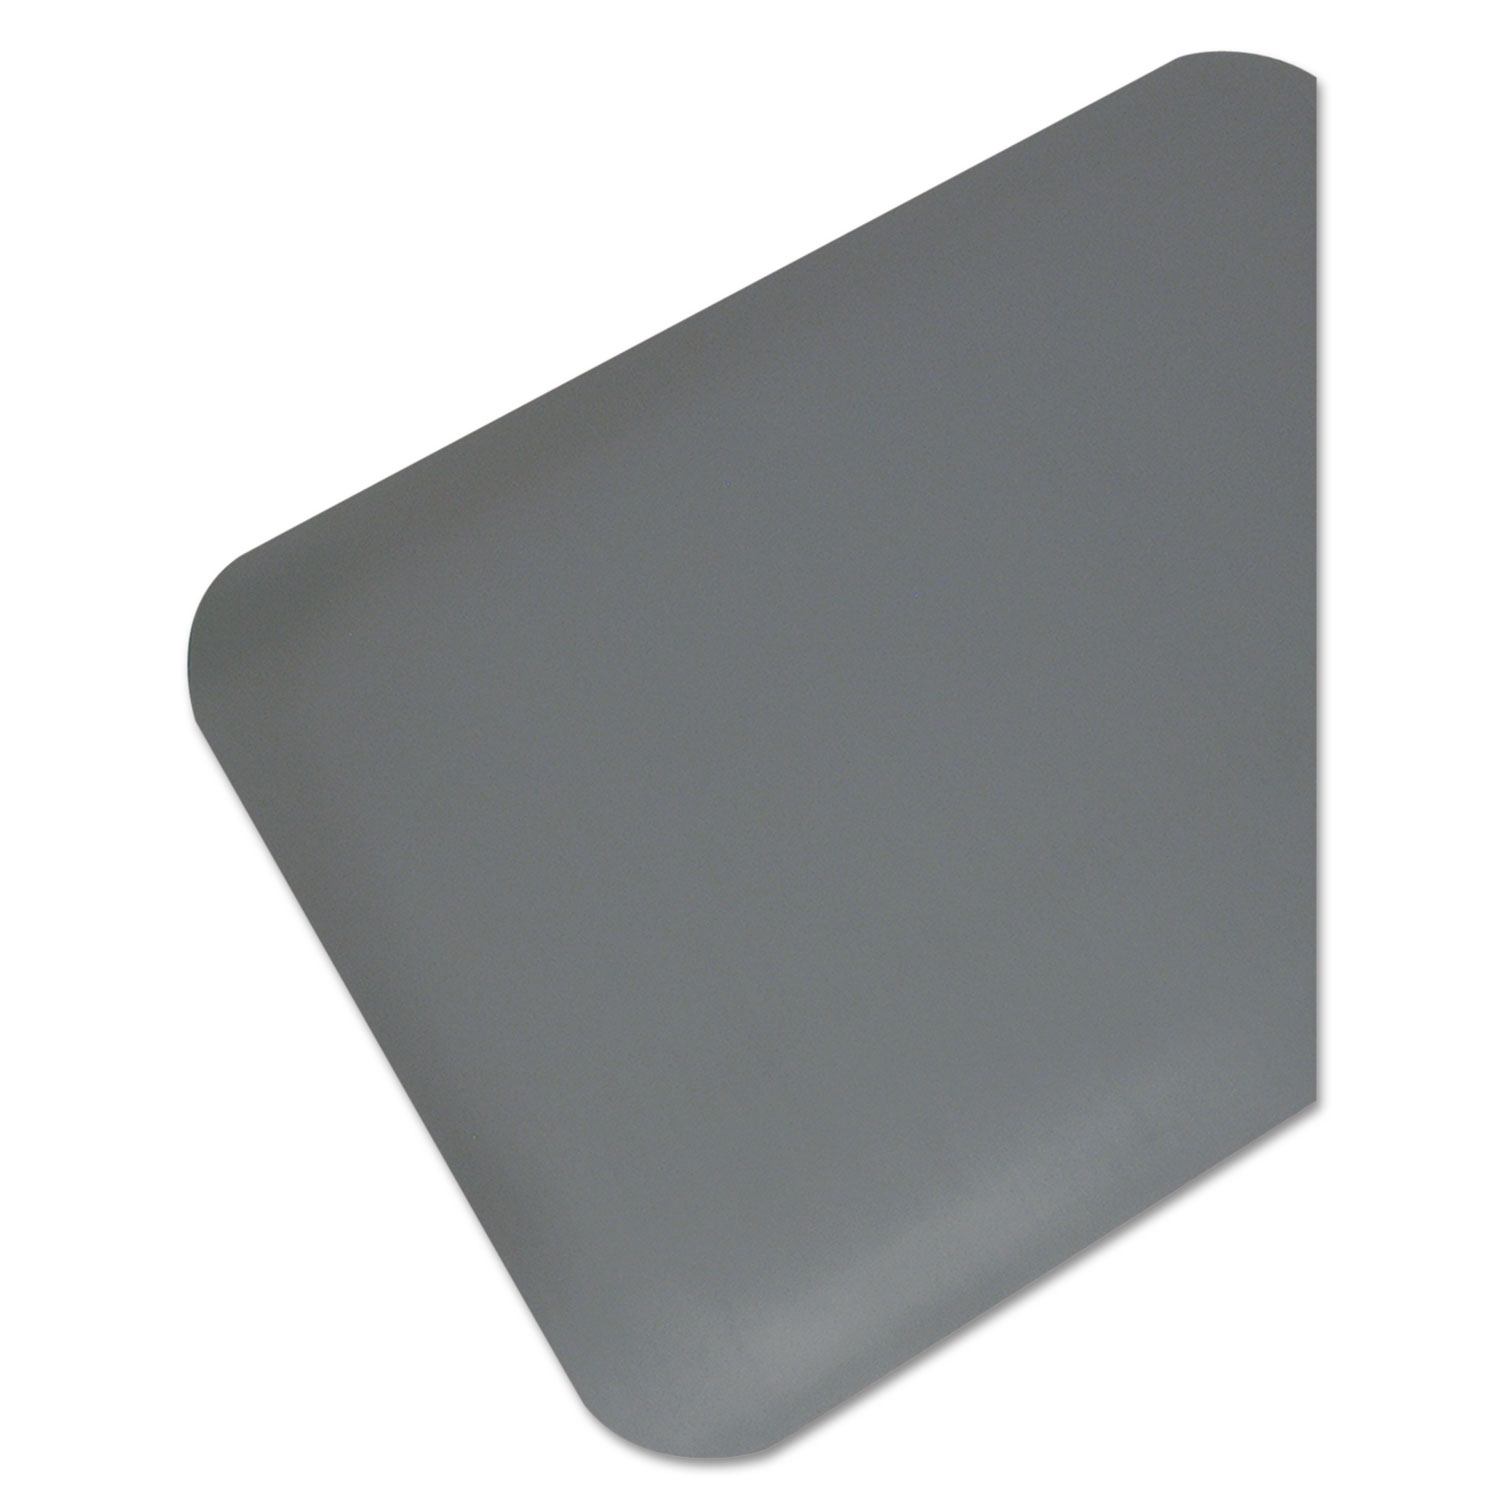  Guardian 44030550 Pro Top Anti-Fatigue Mat, PVC Foam/Solid PVC, 36 x 60, Gray (MLL44030550) 